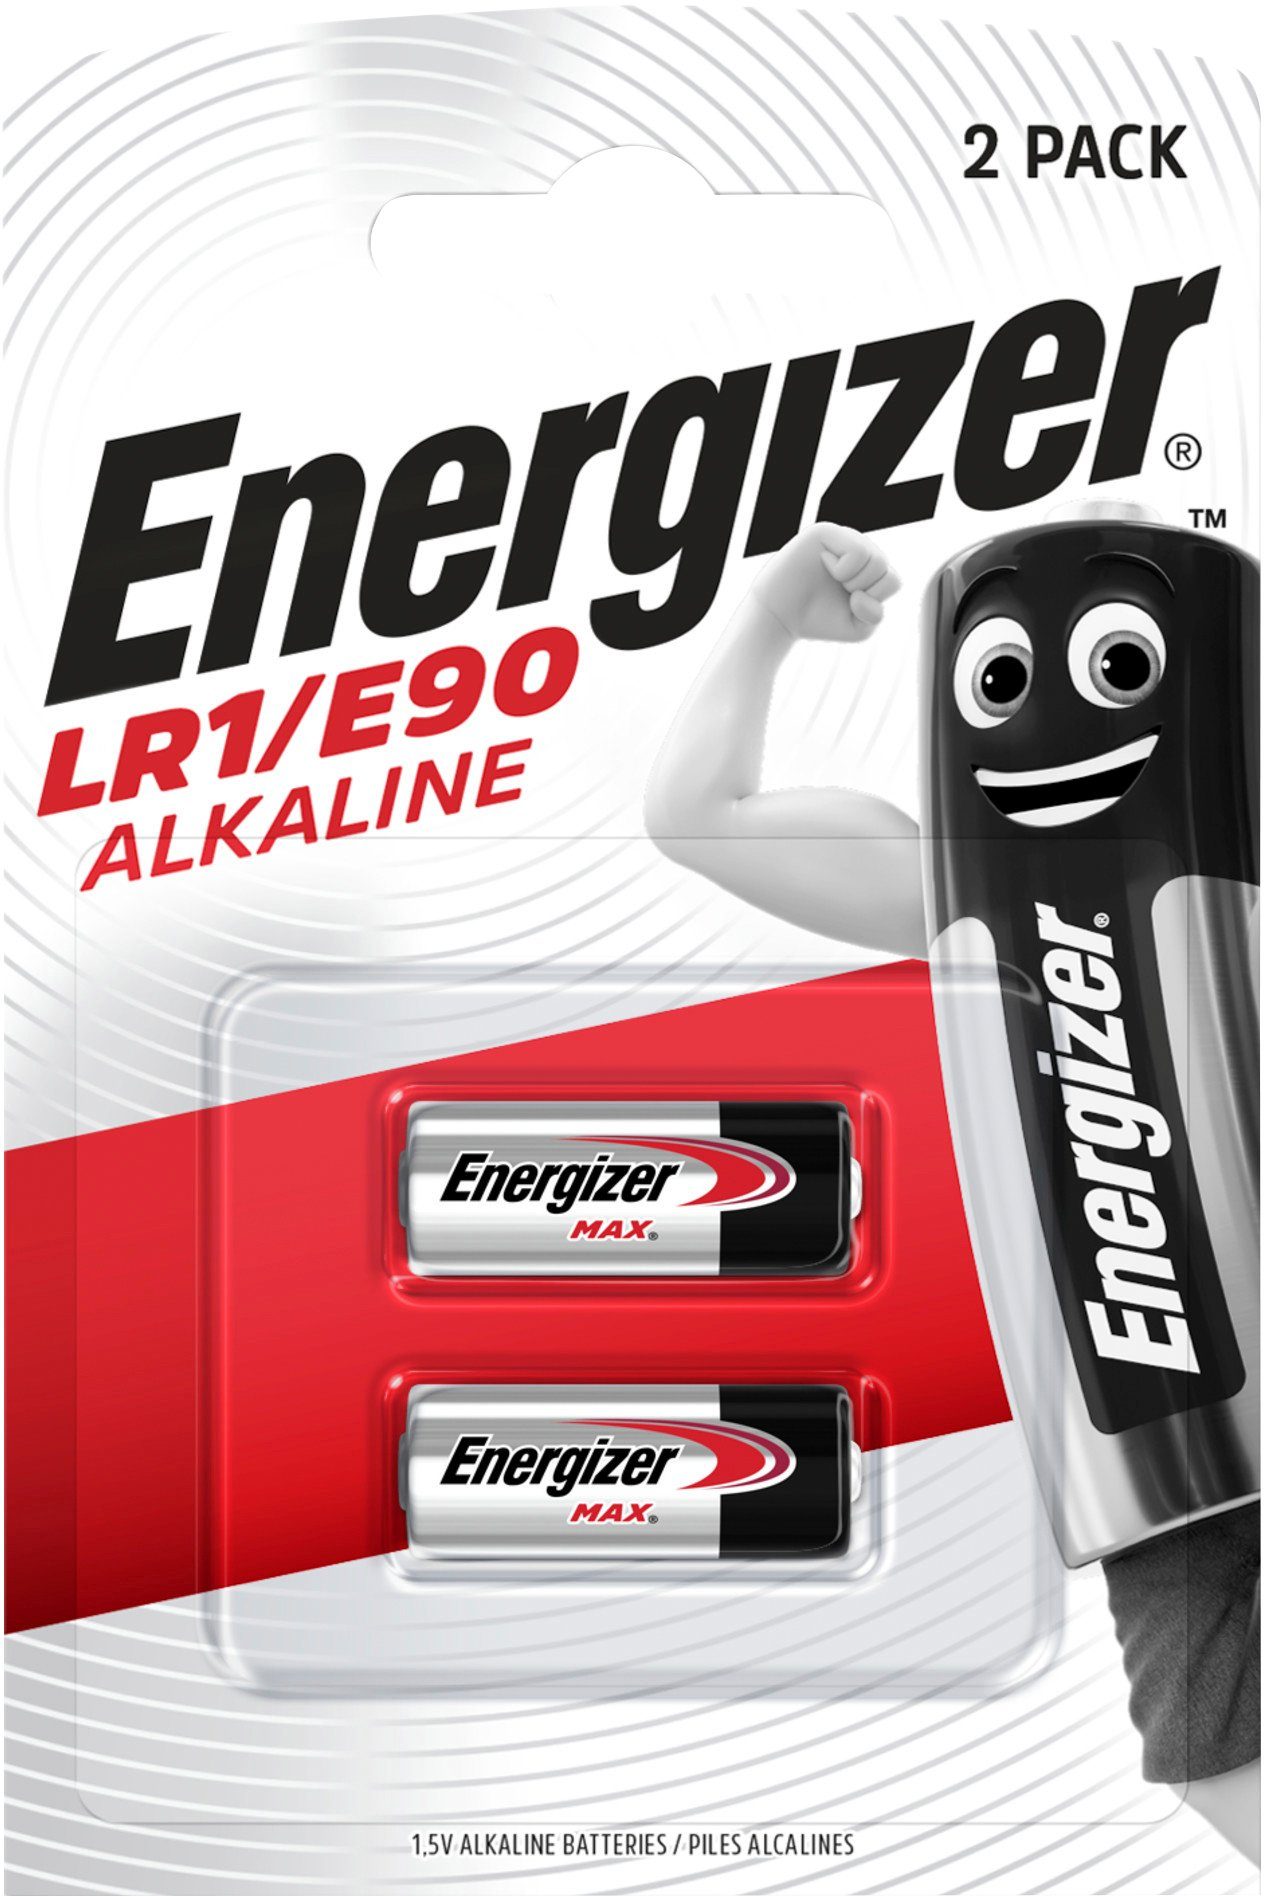 Energizer 2er Pack Alkali Mangan LR1/E90 Batterie, (1,5 V, 2 St)